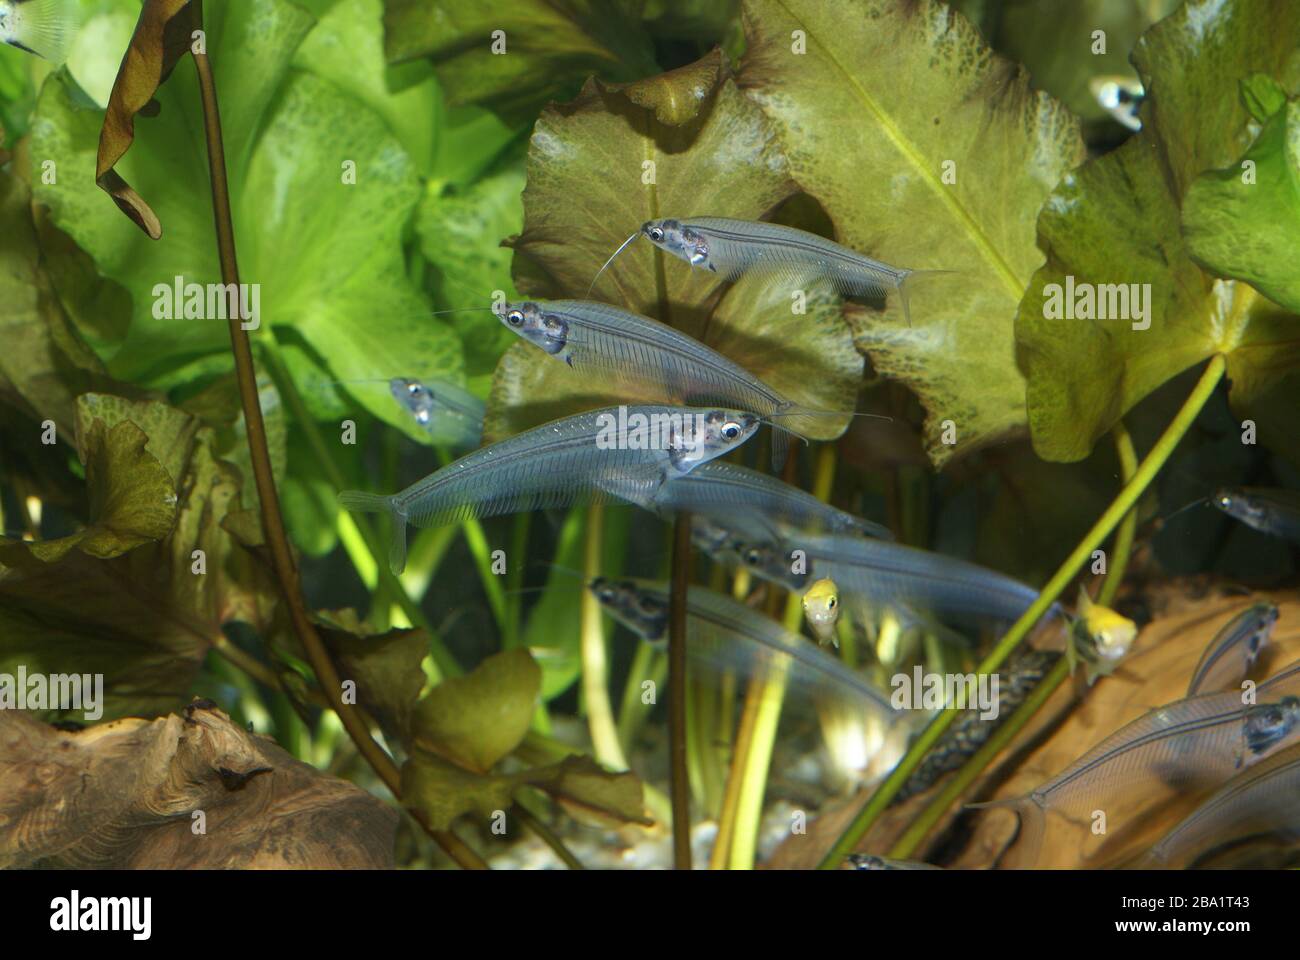 Kryptopterus bicirrhis, often called the glass catfish Stock Photo